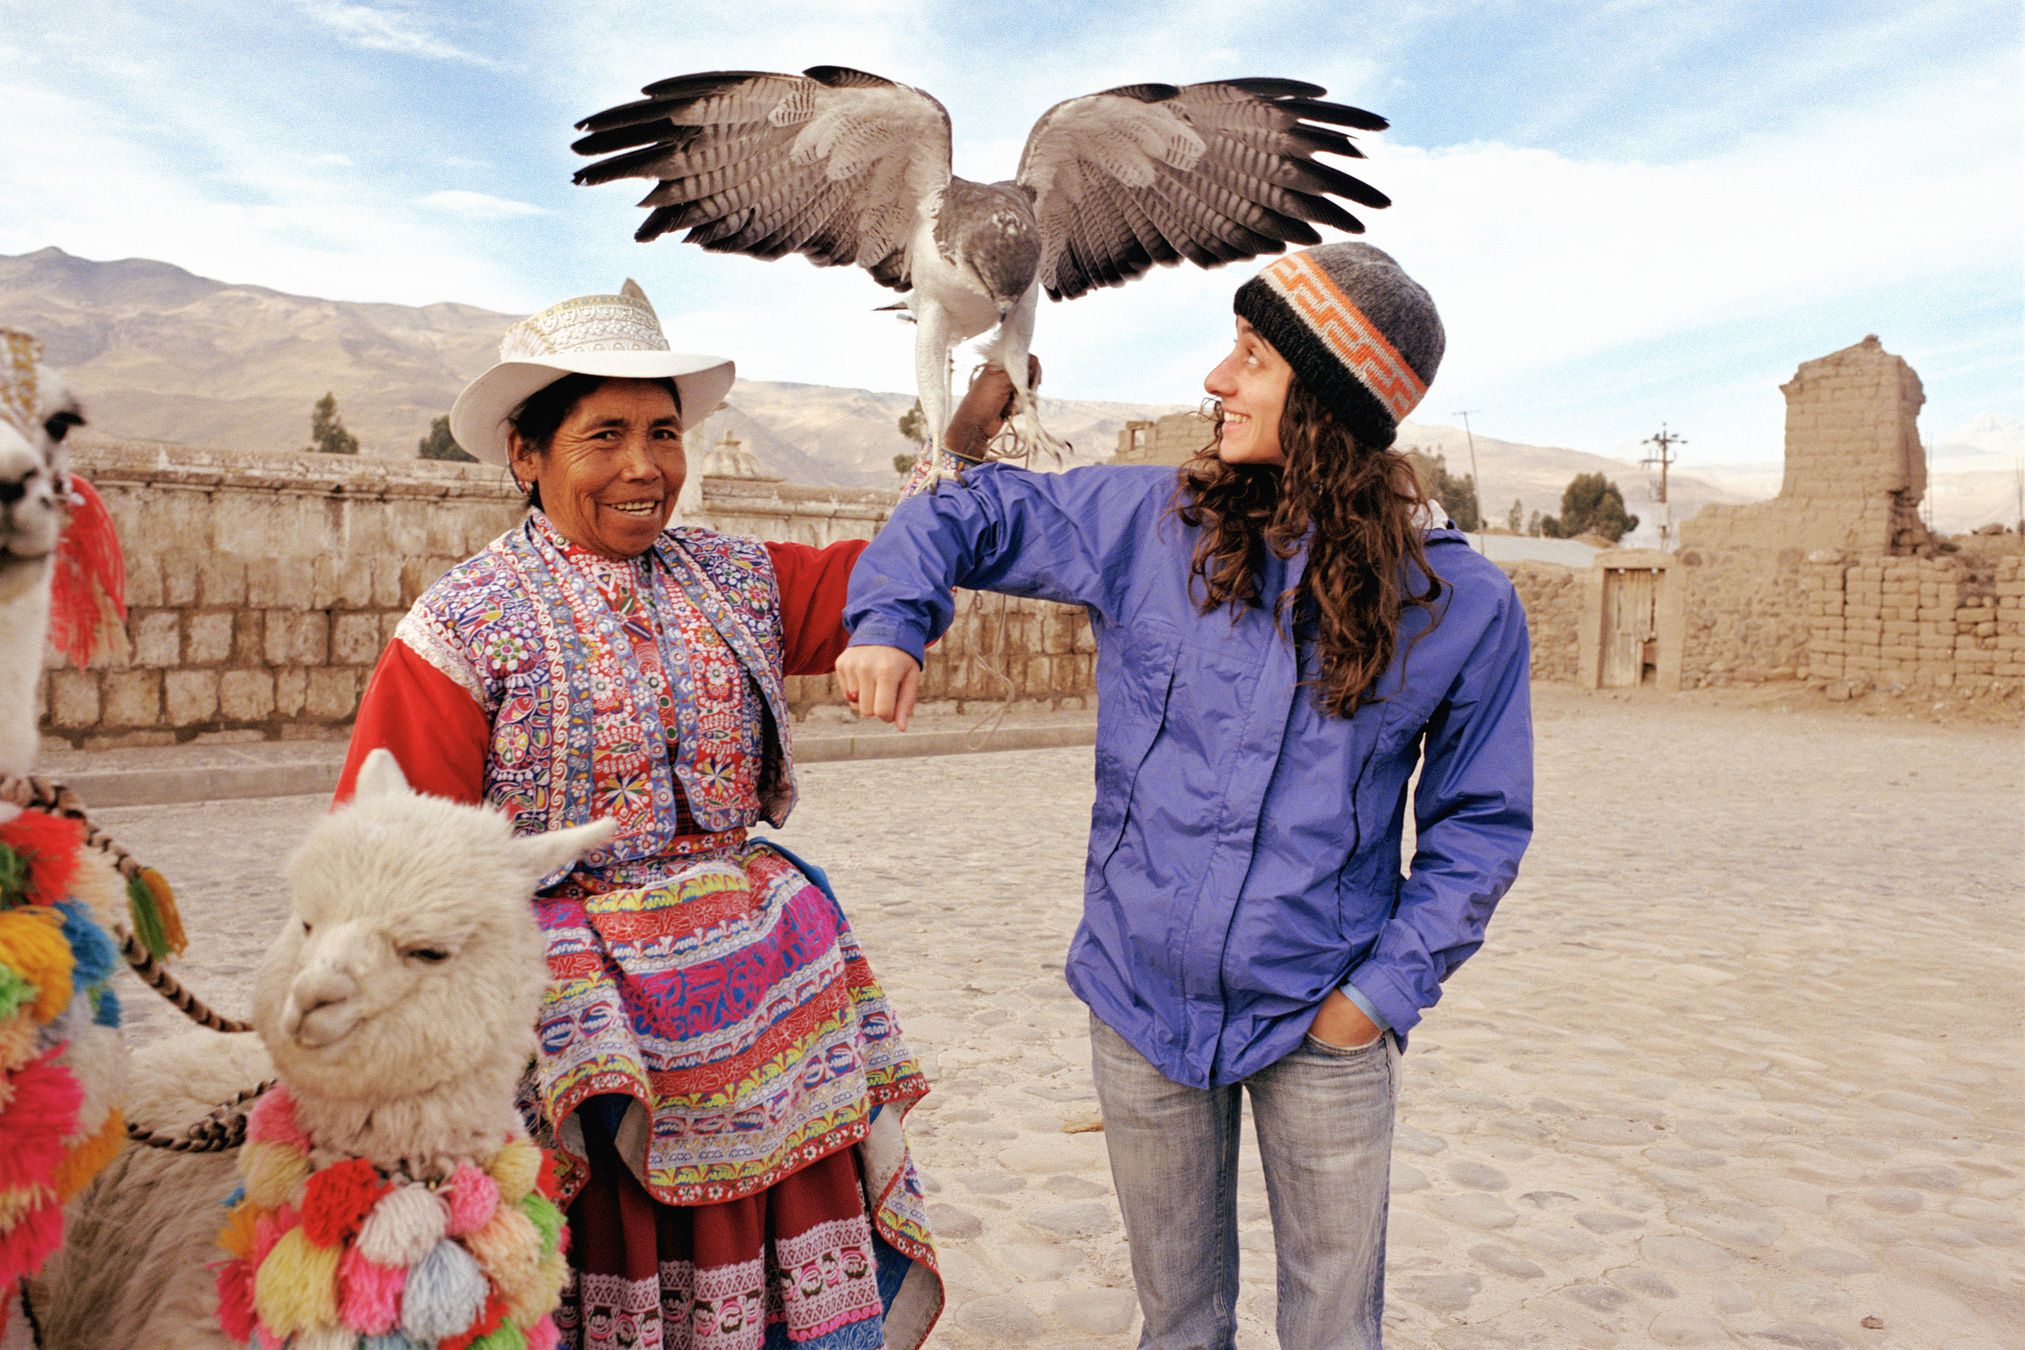 peru traveling things budget tourist tips getty alpaca gaglione frank eagle